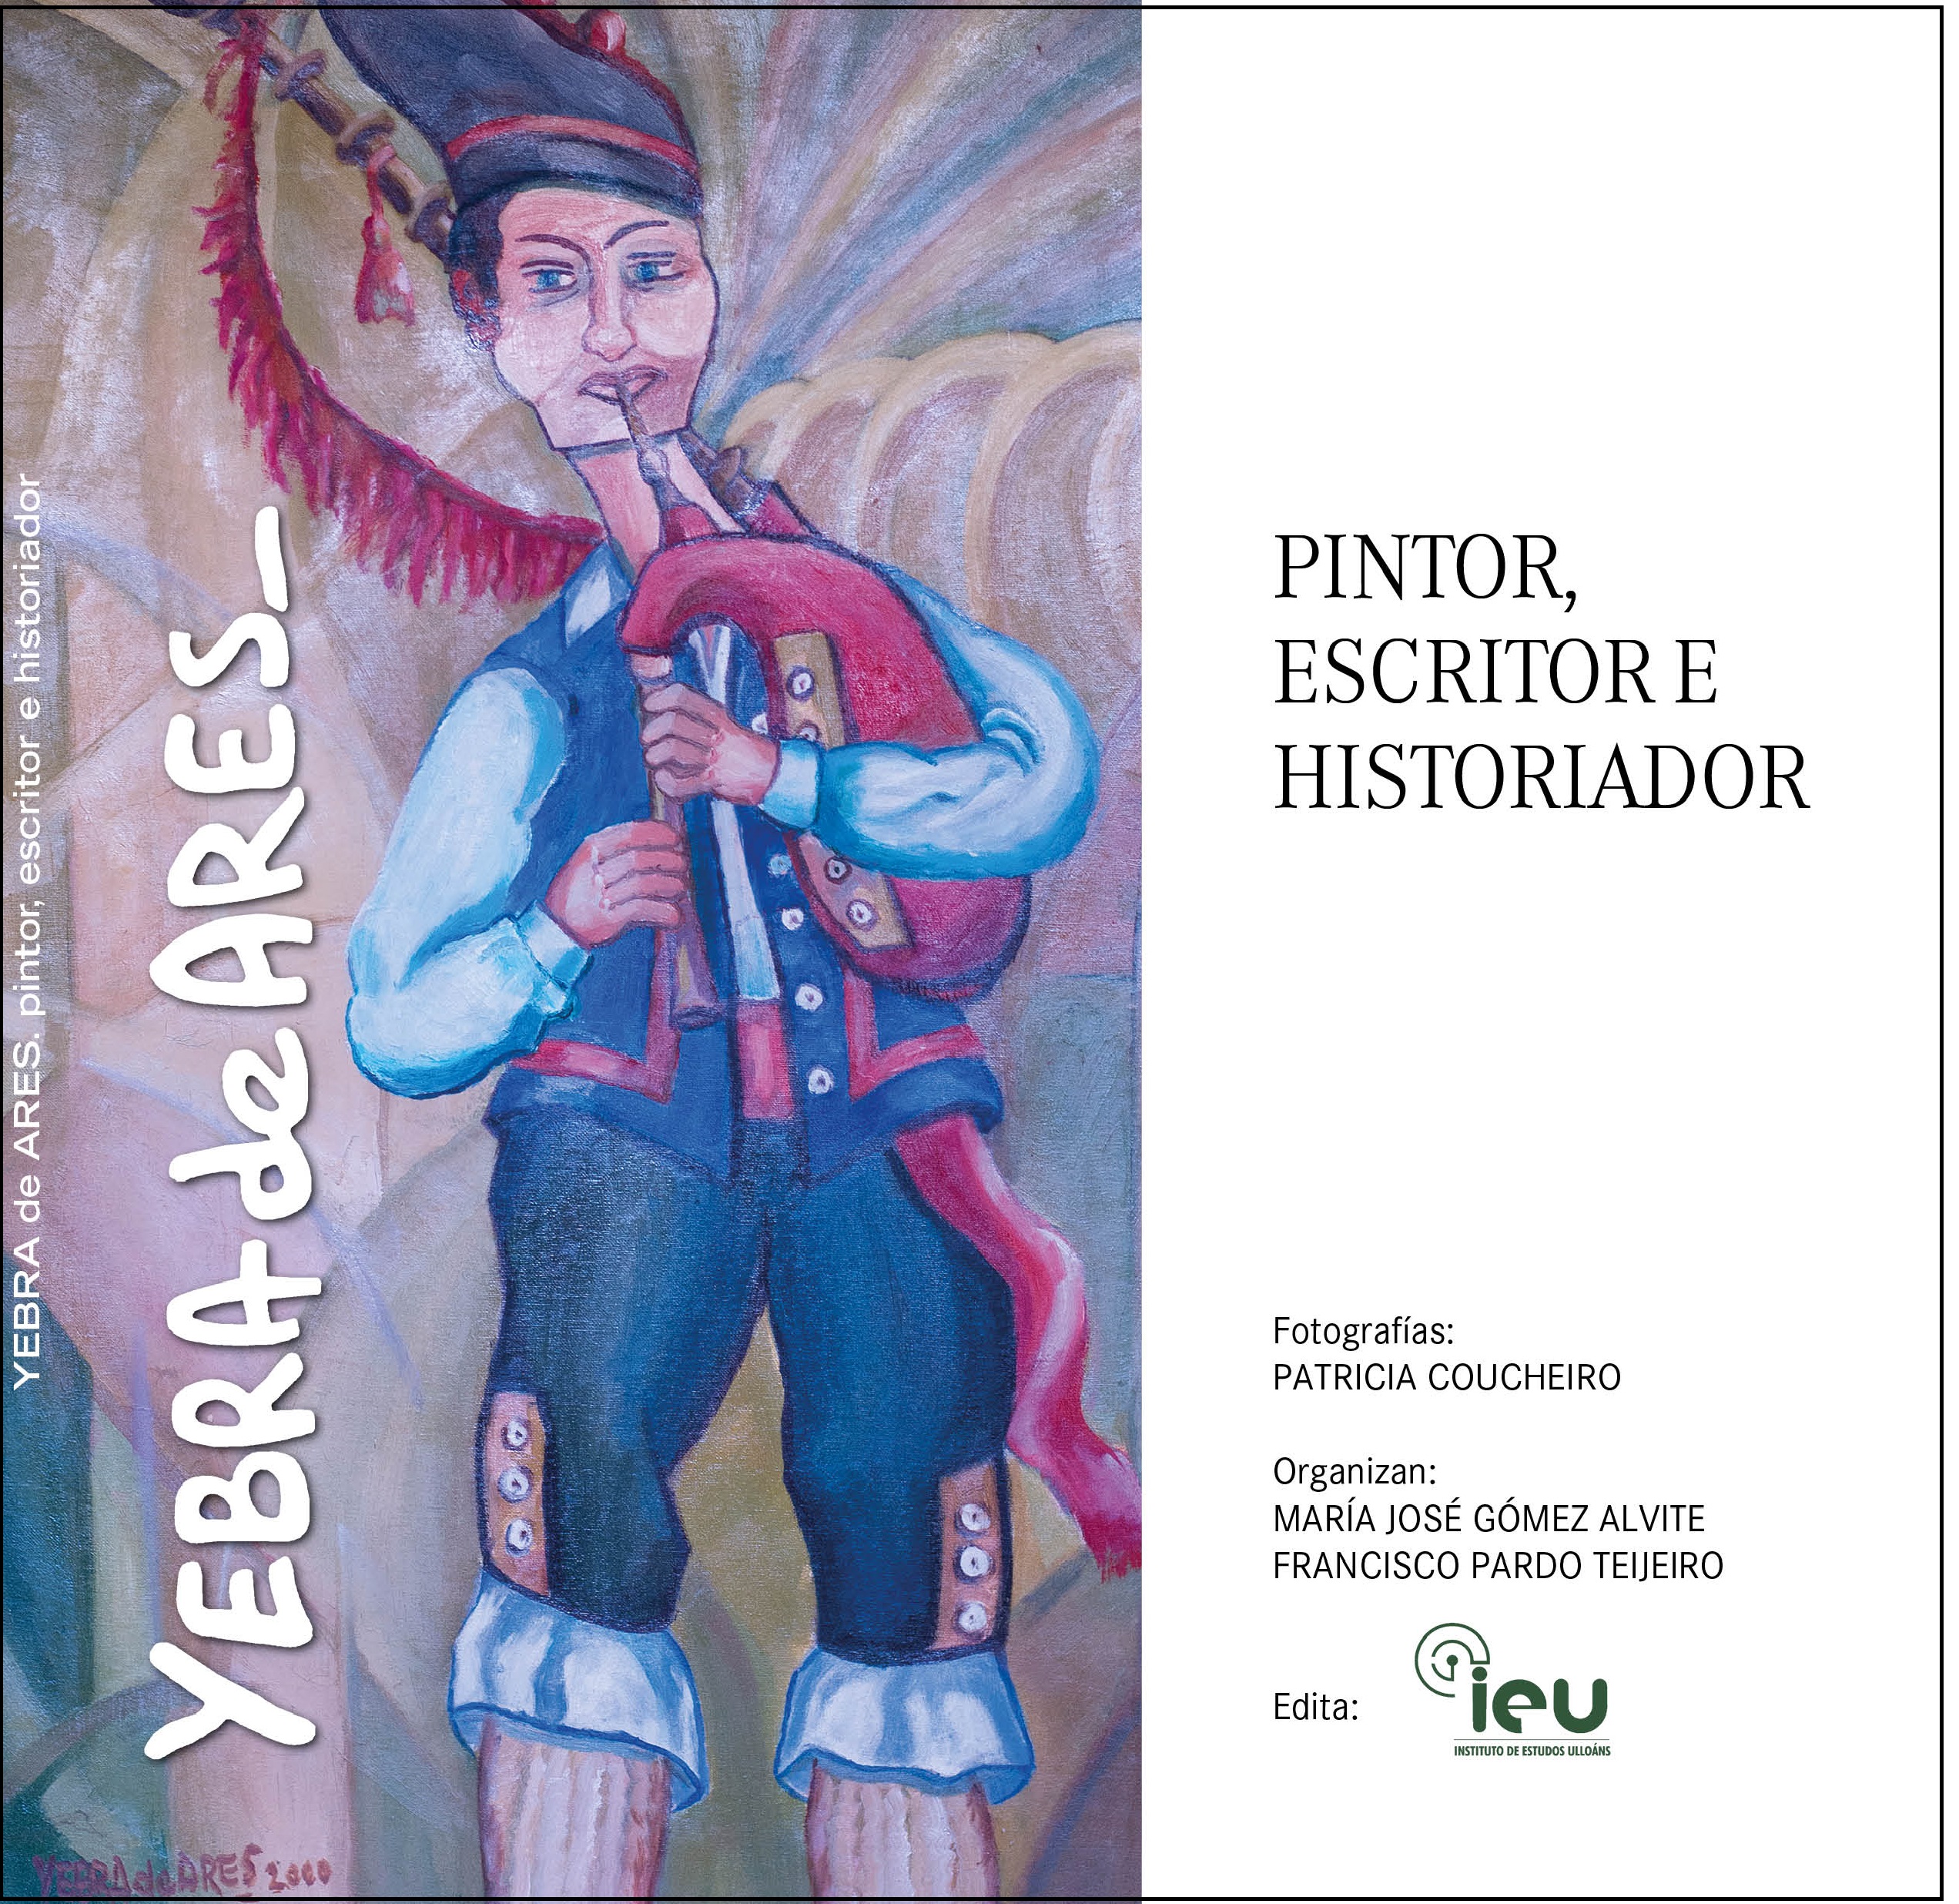 Portada catalogo expo Yebra de Ares, Instituto de Estudos lloáns 1